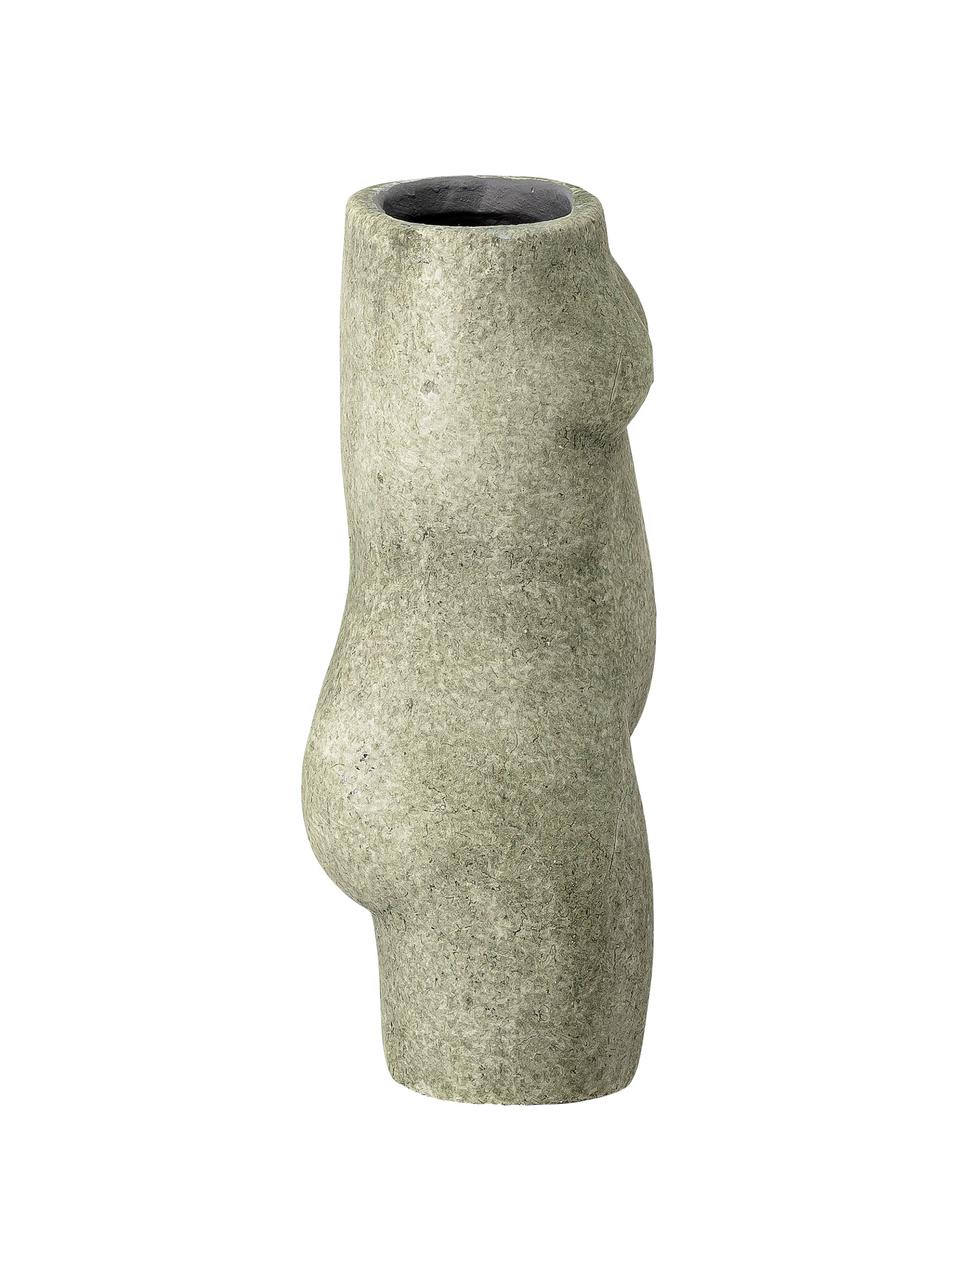 Malá váza z terakoty Emeli, Terrakotta, Zelená, Š 10 x V 16 cm